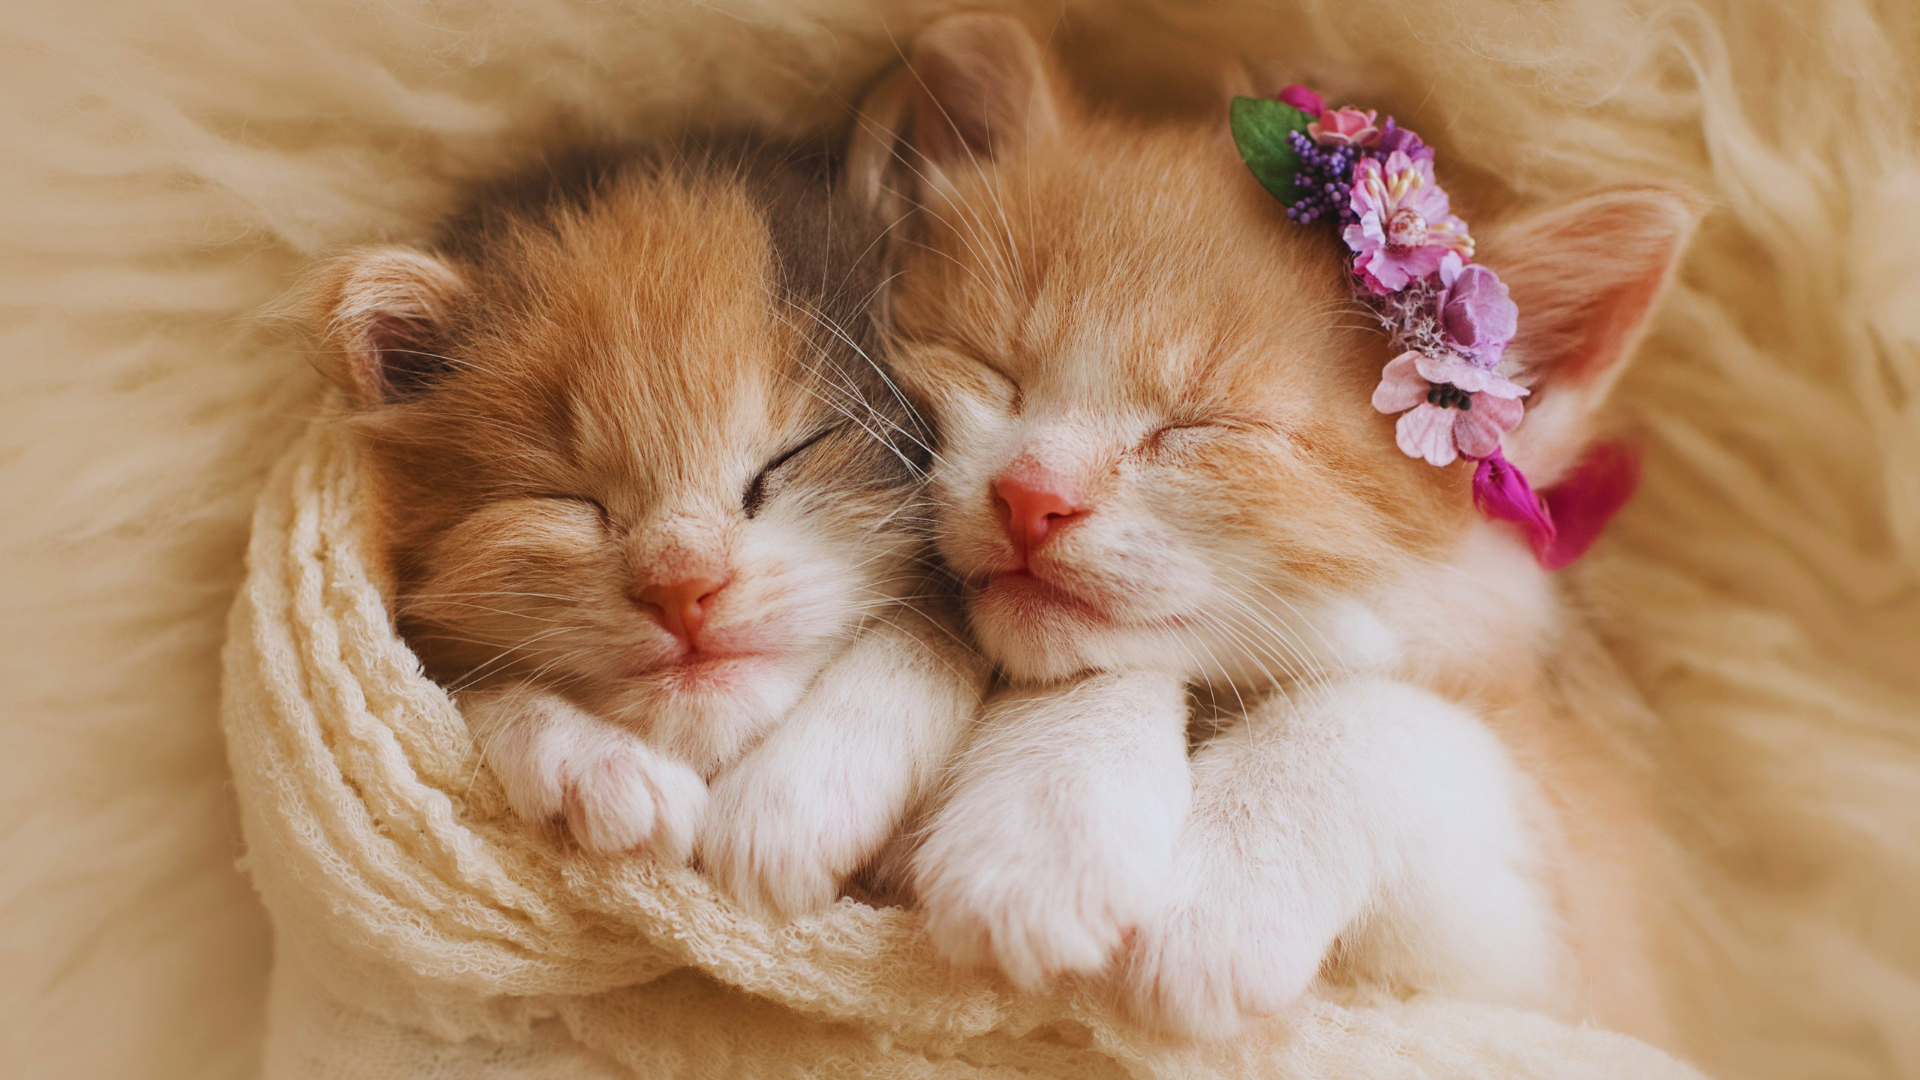 Twee rood met witte kittens knuffelend in een dekentje.